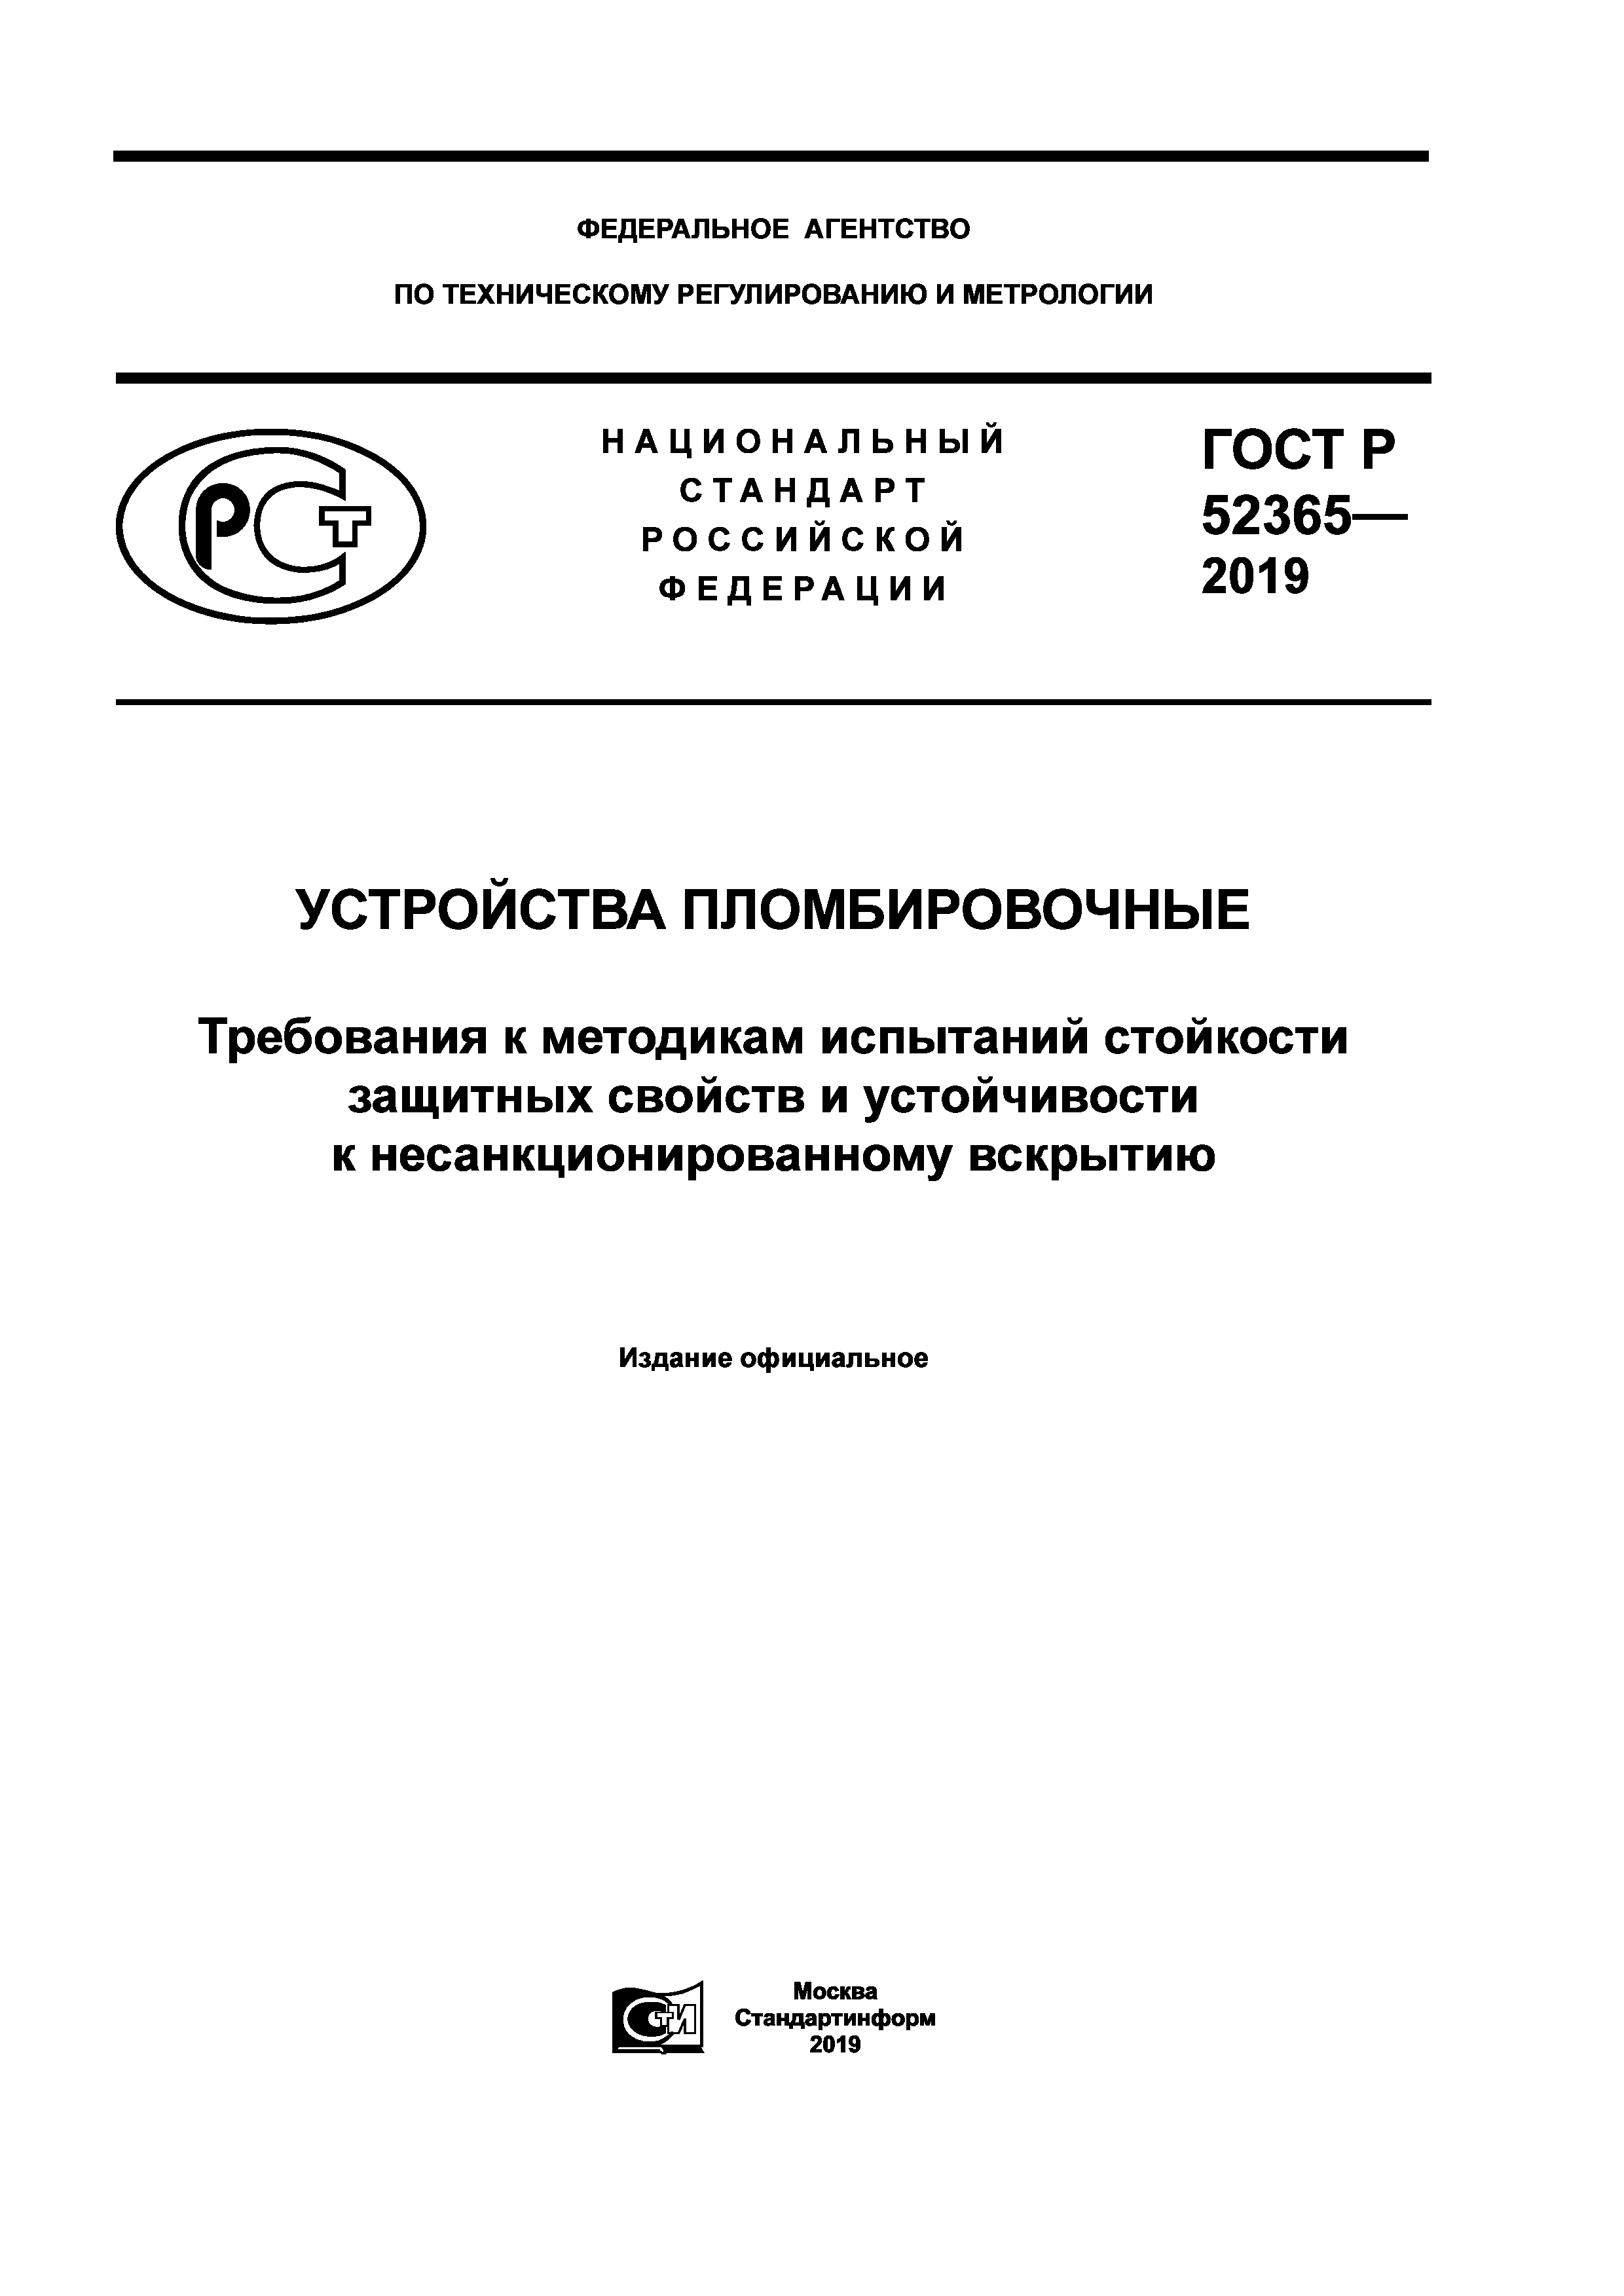 ГОСТ Р 52365-2019